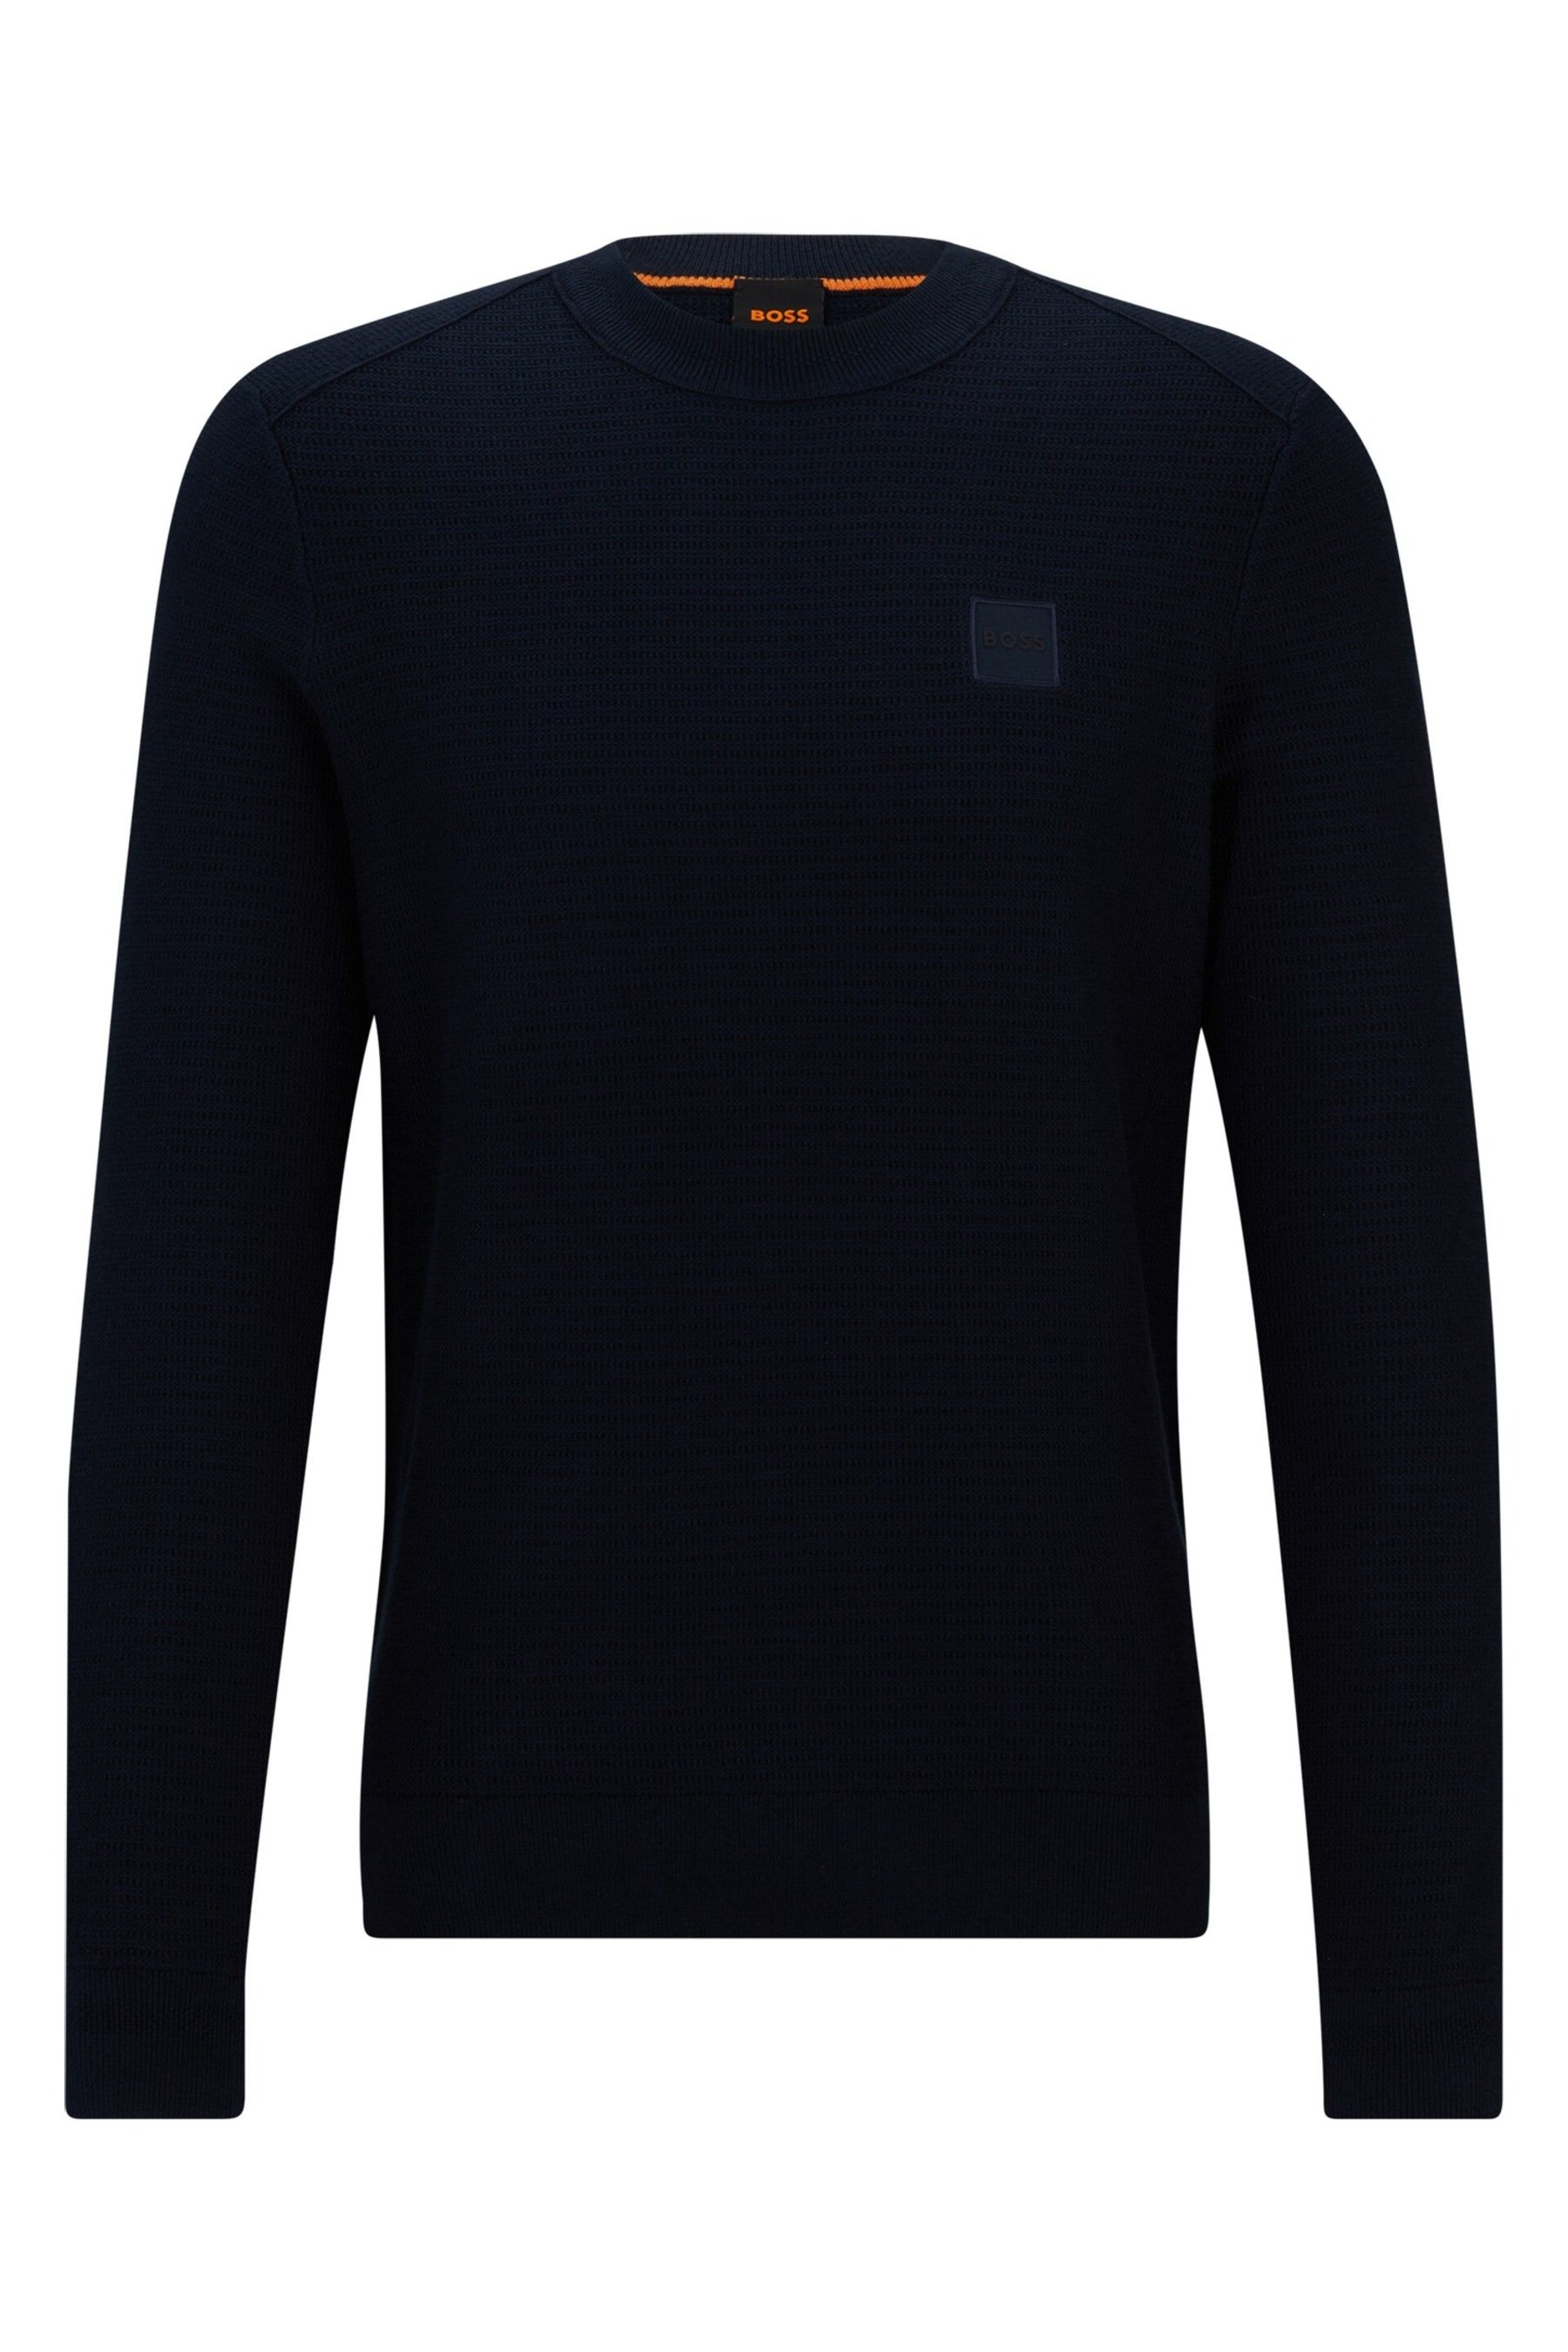 BOSS Dark Blue Cashmere Blend Logo Patch Jumper - Image 5 of 5